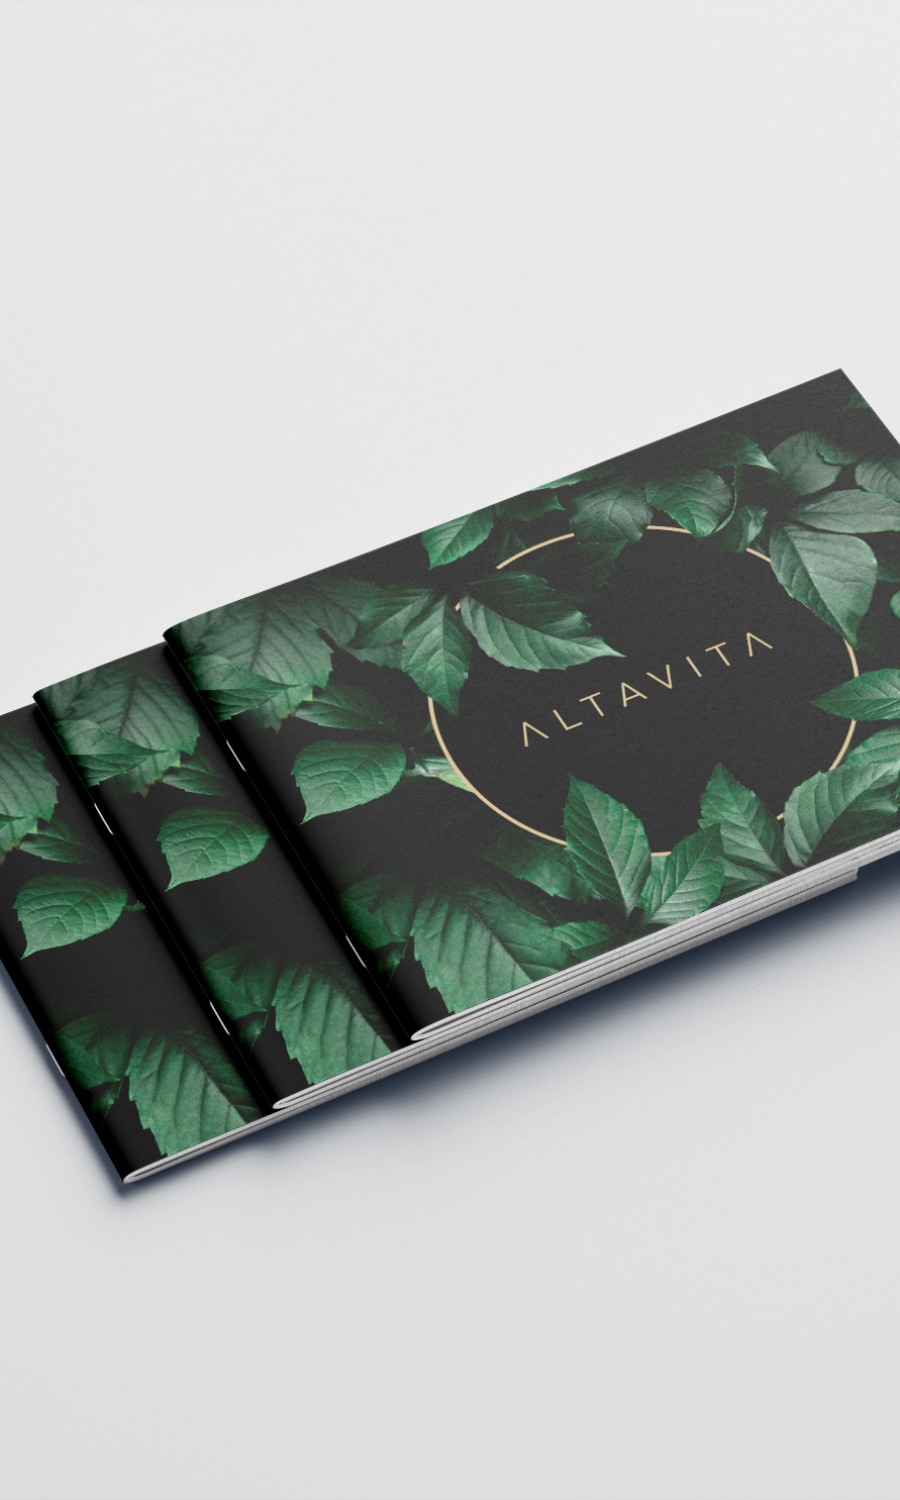 Altavita Brochure Covers